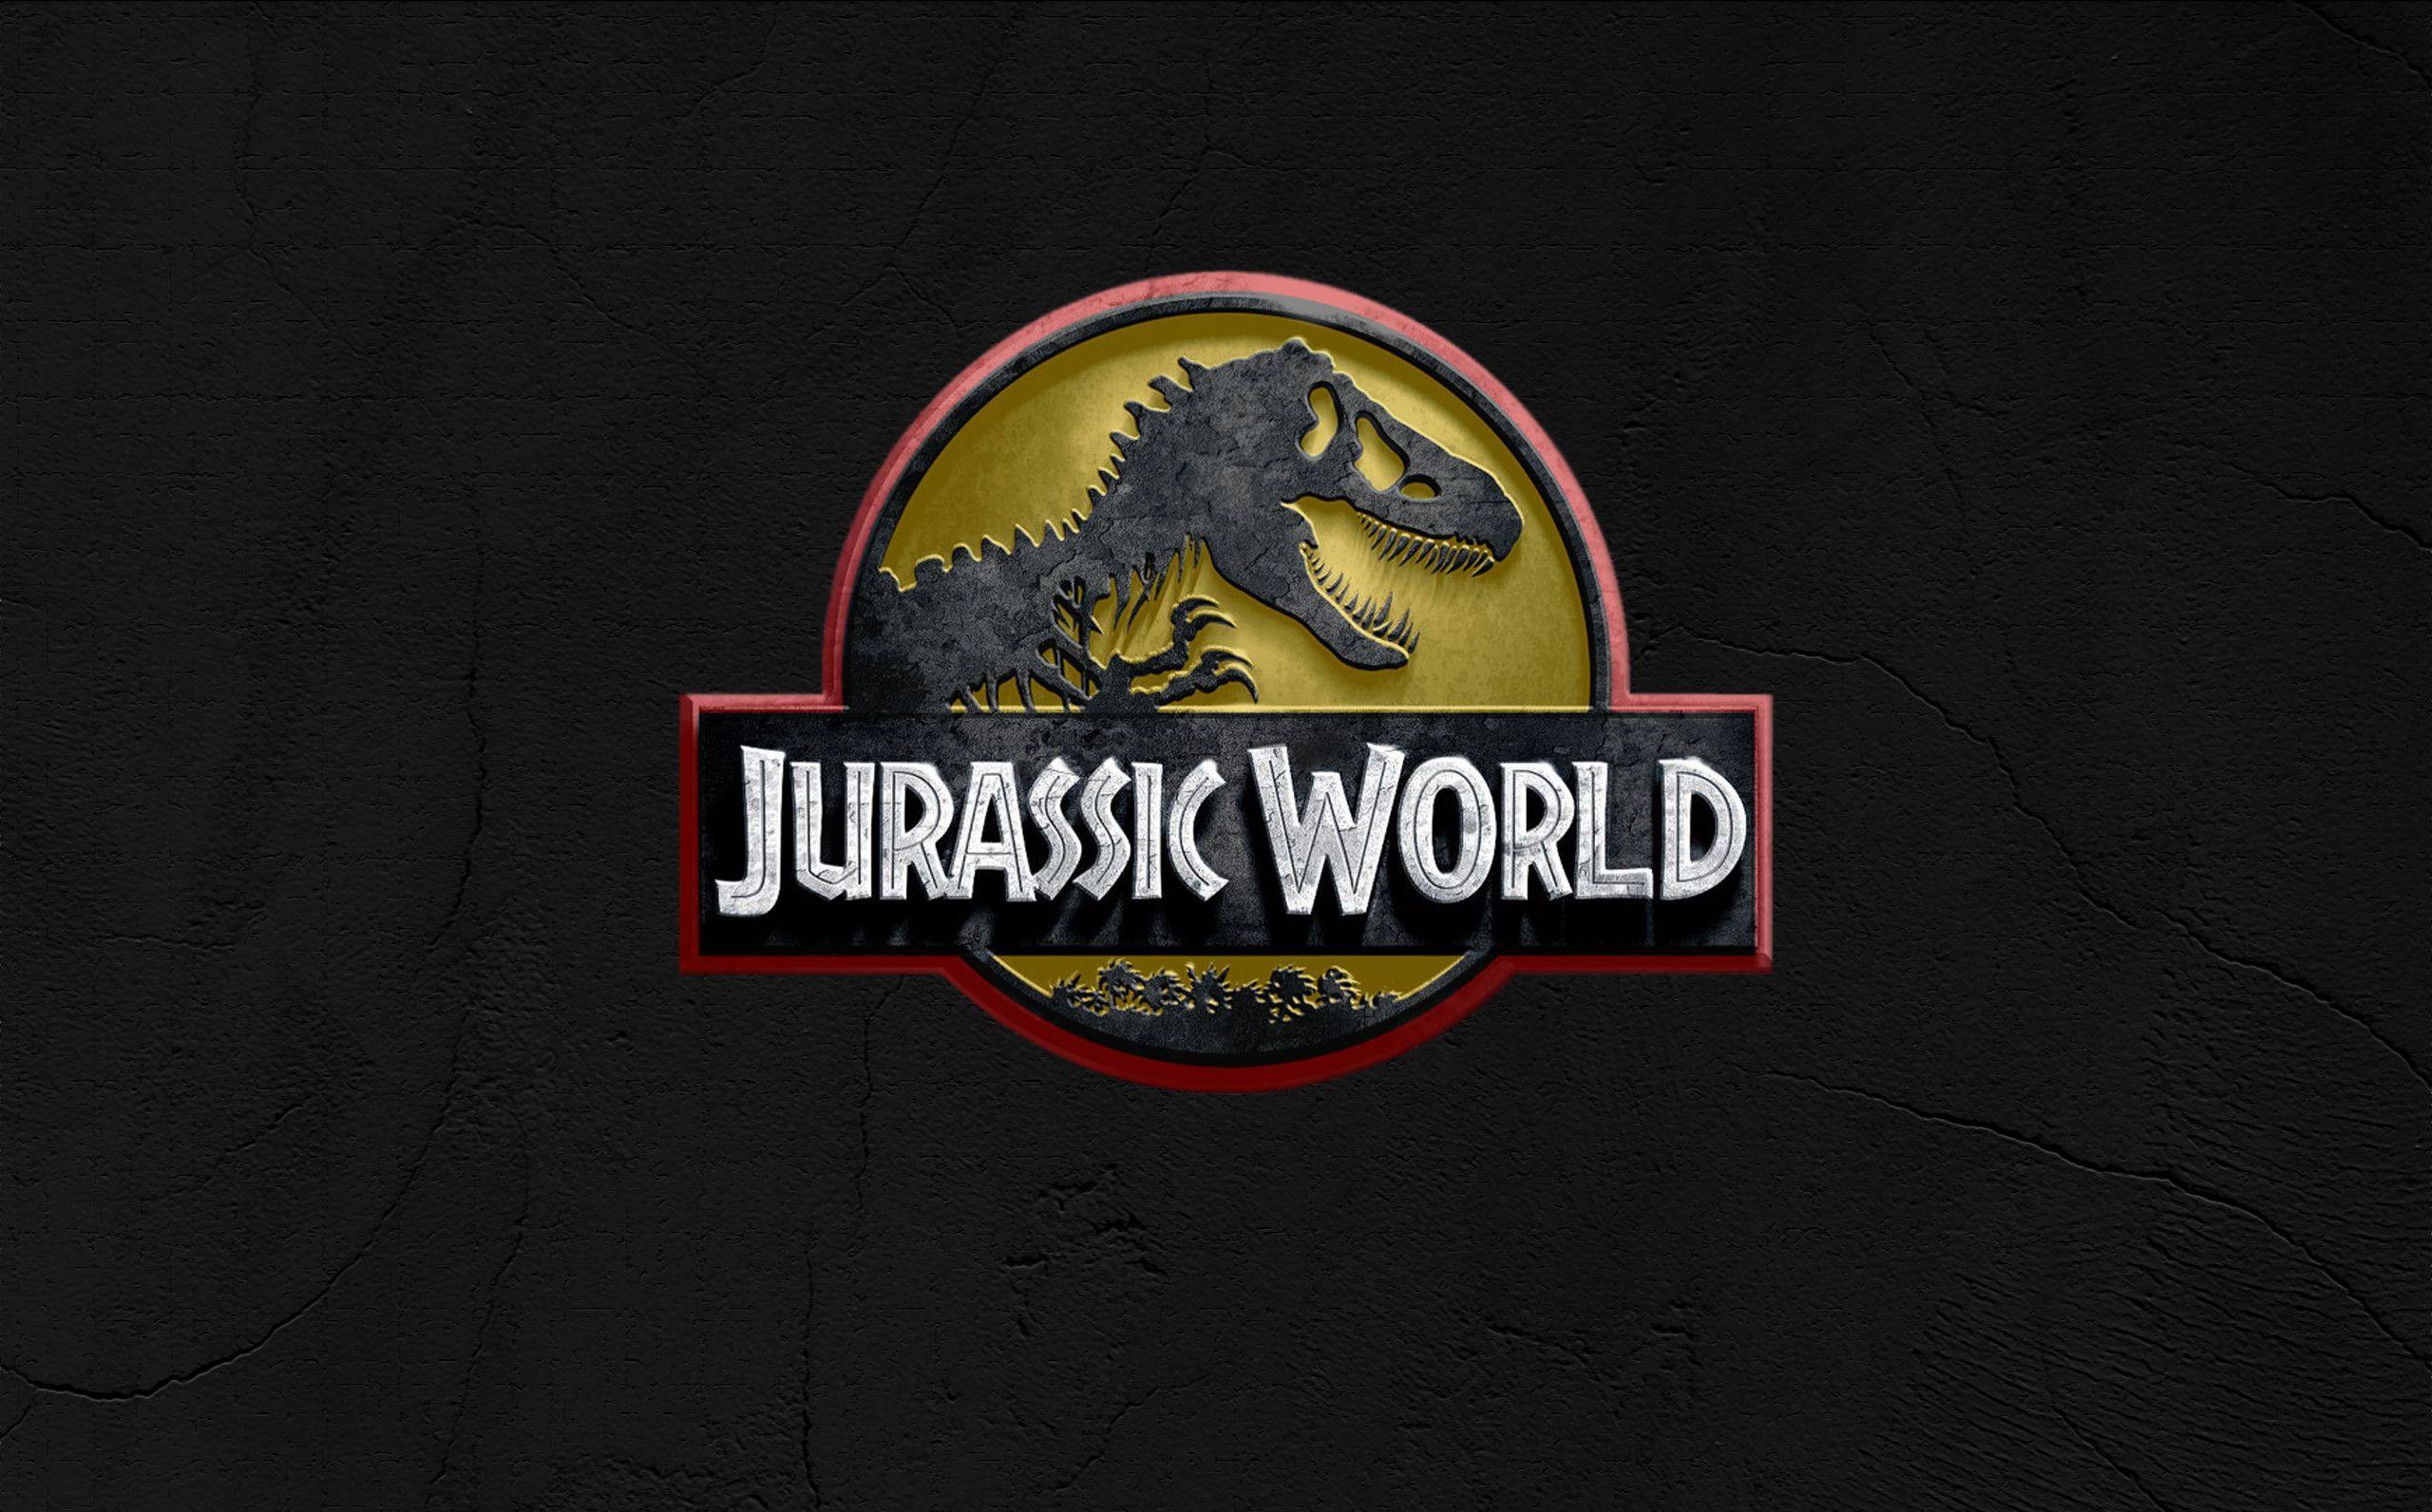 Cool Movie Logo - Found this cool logo online : JurassicPark